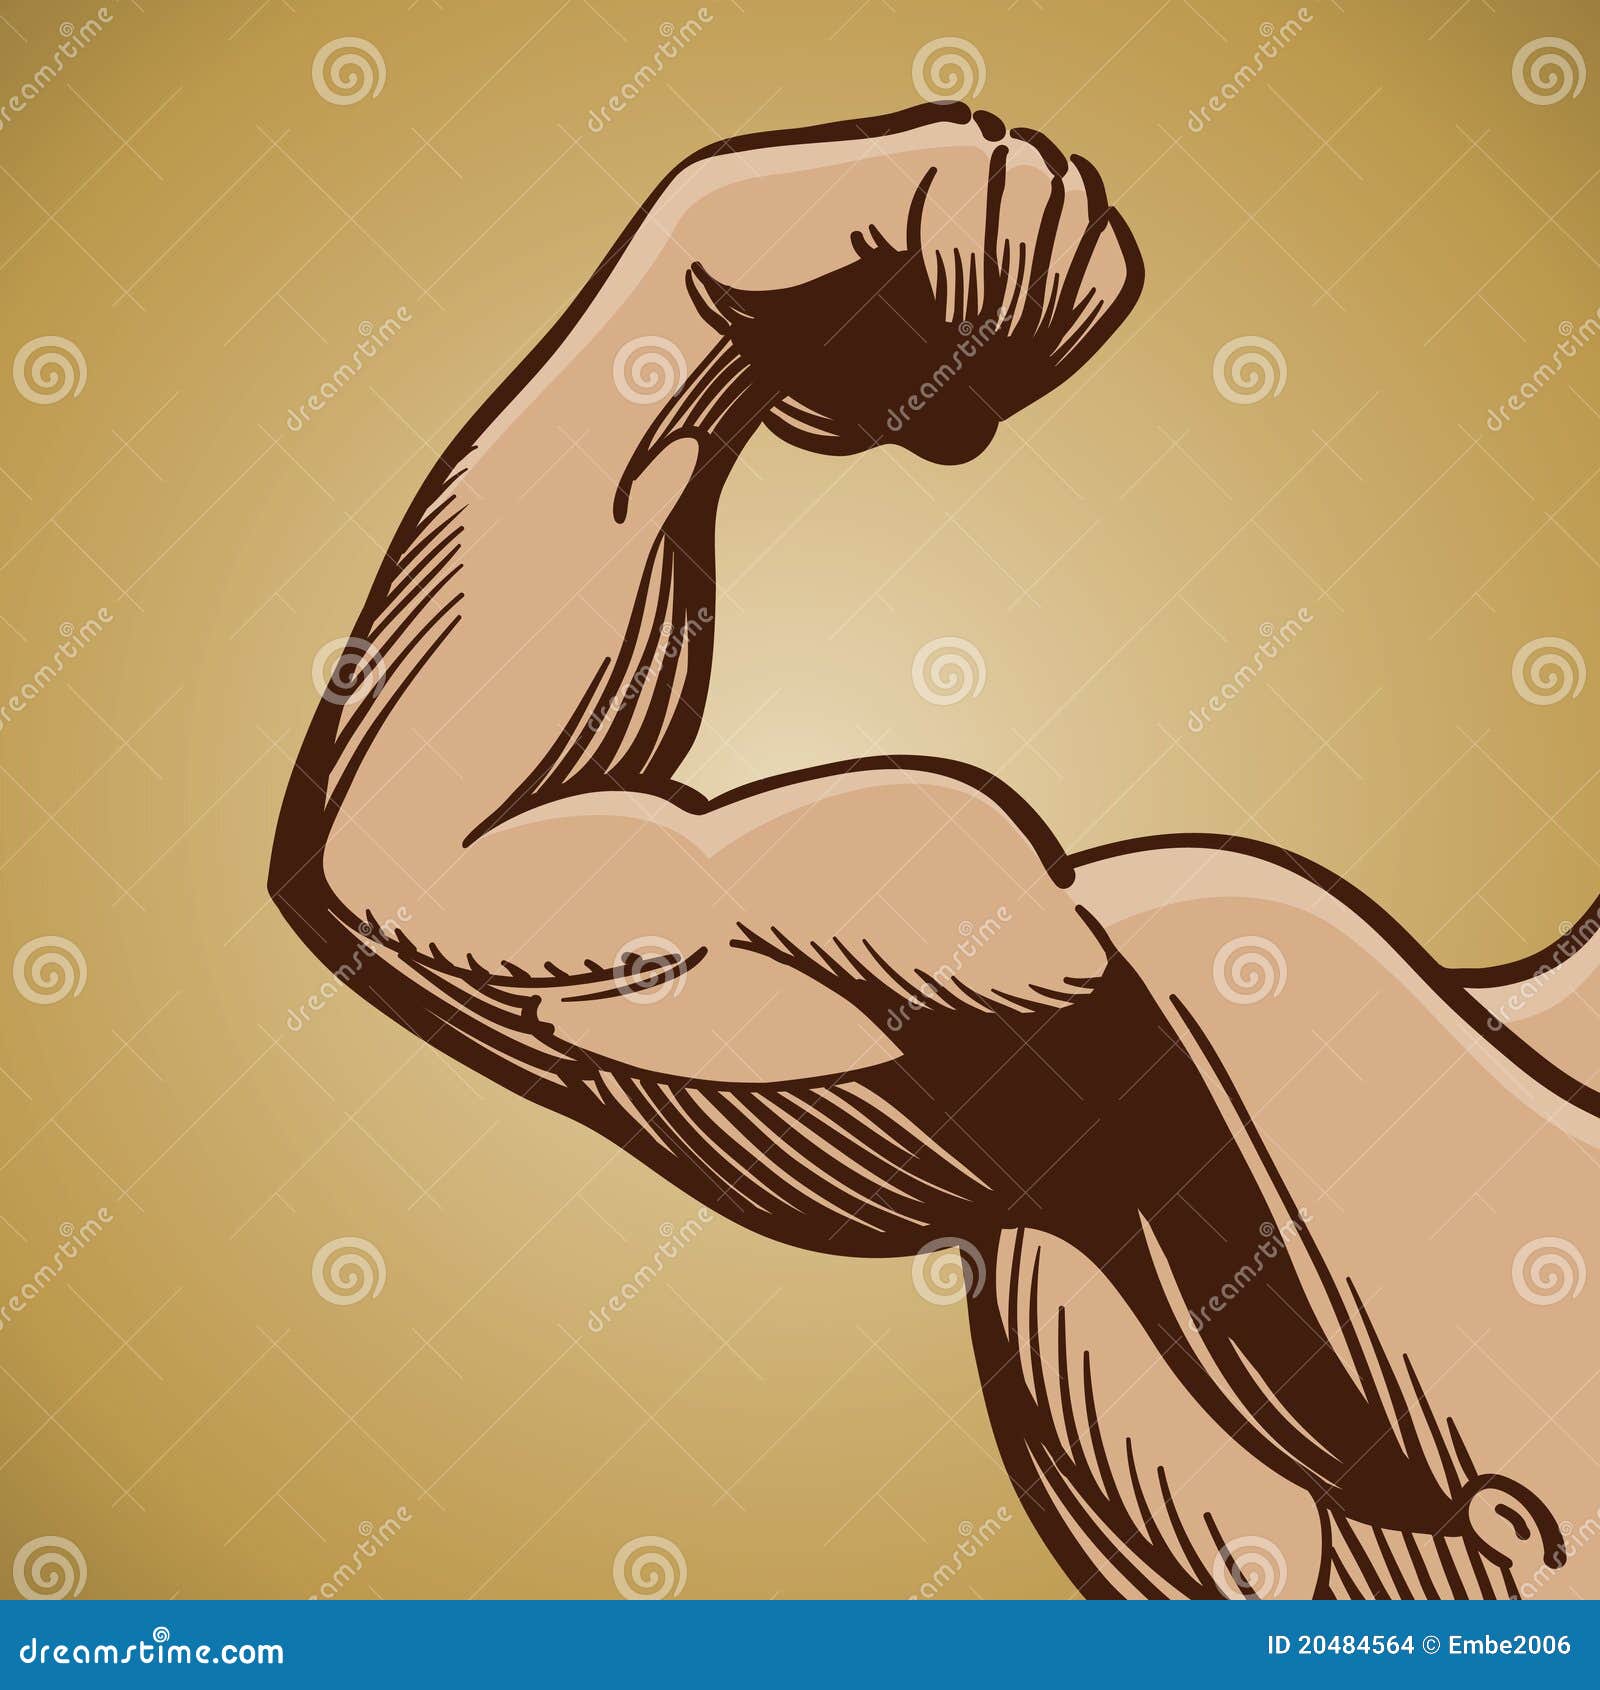 man-flexing-arm-muscle-20484564.jpg